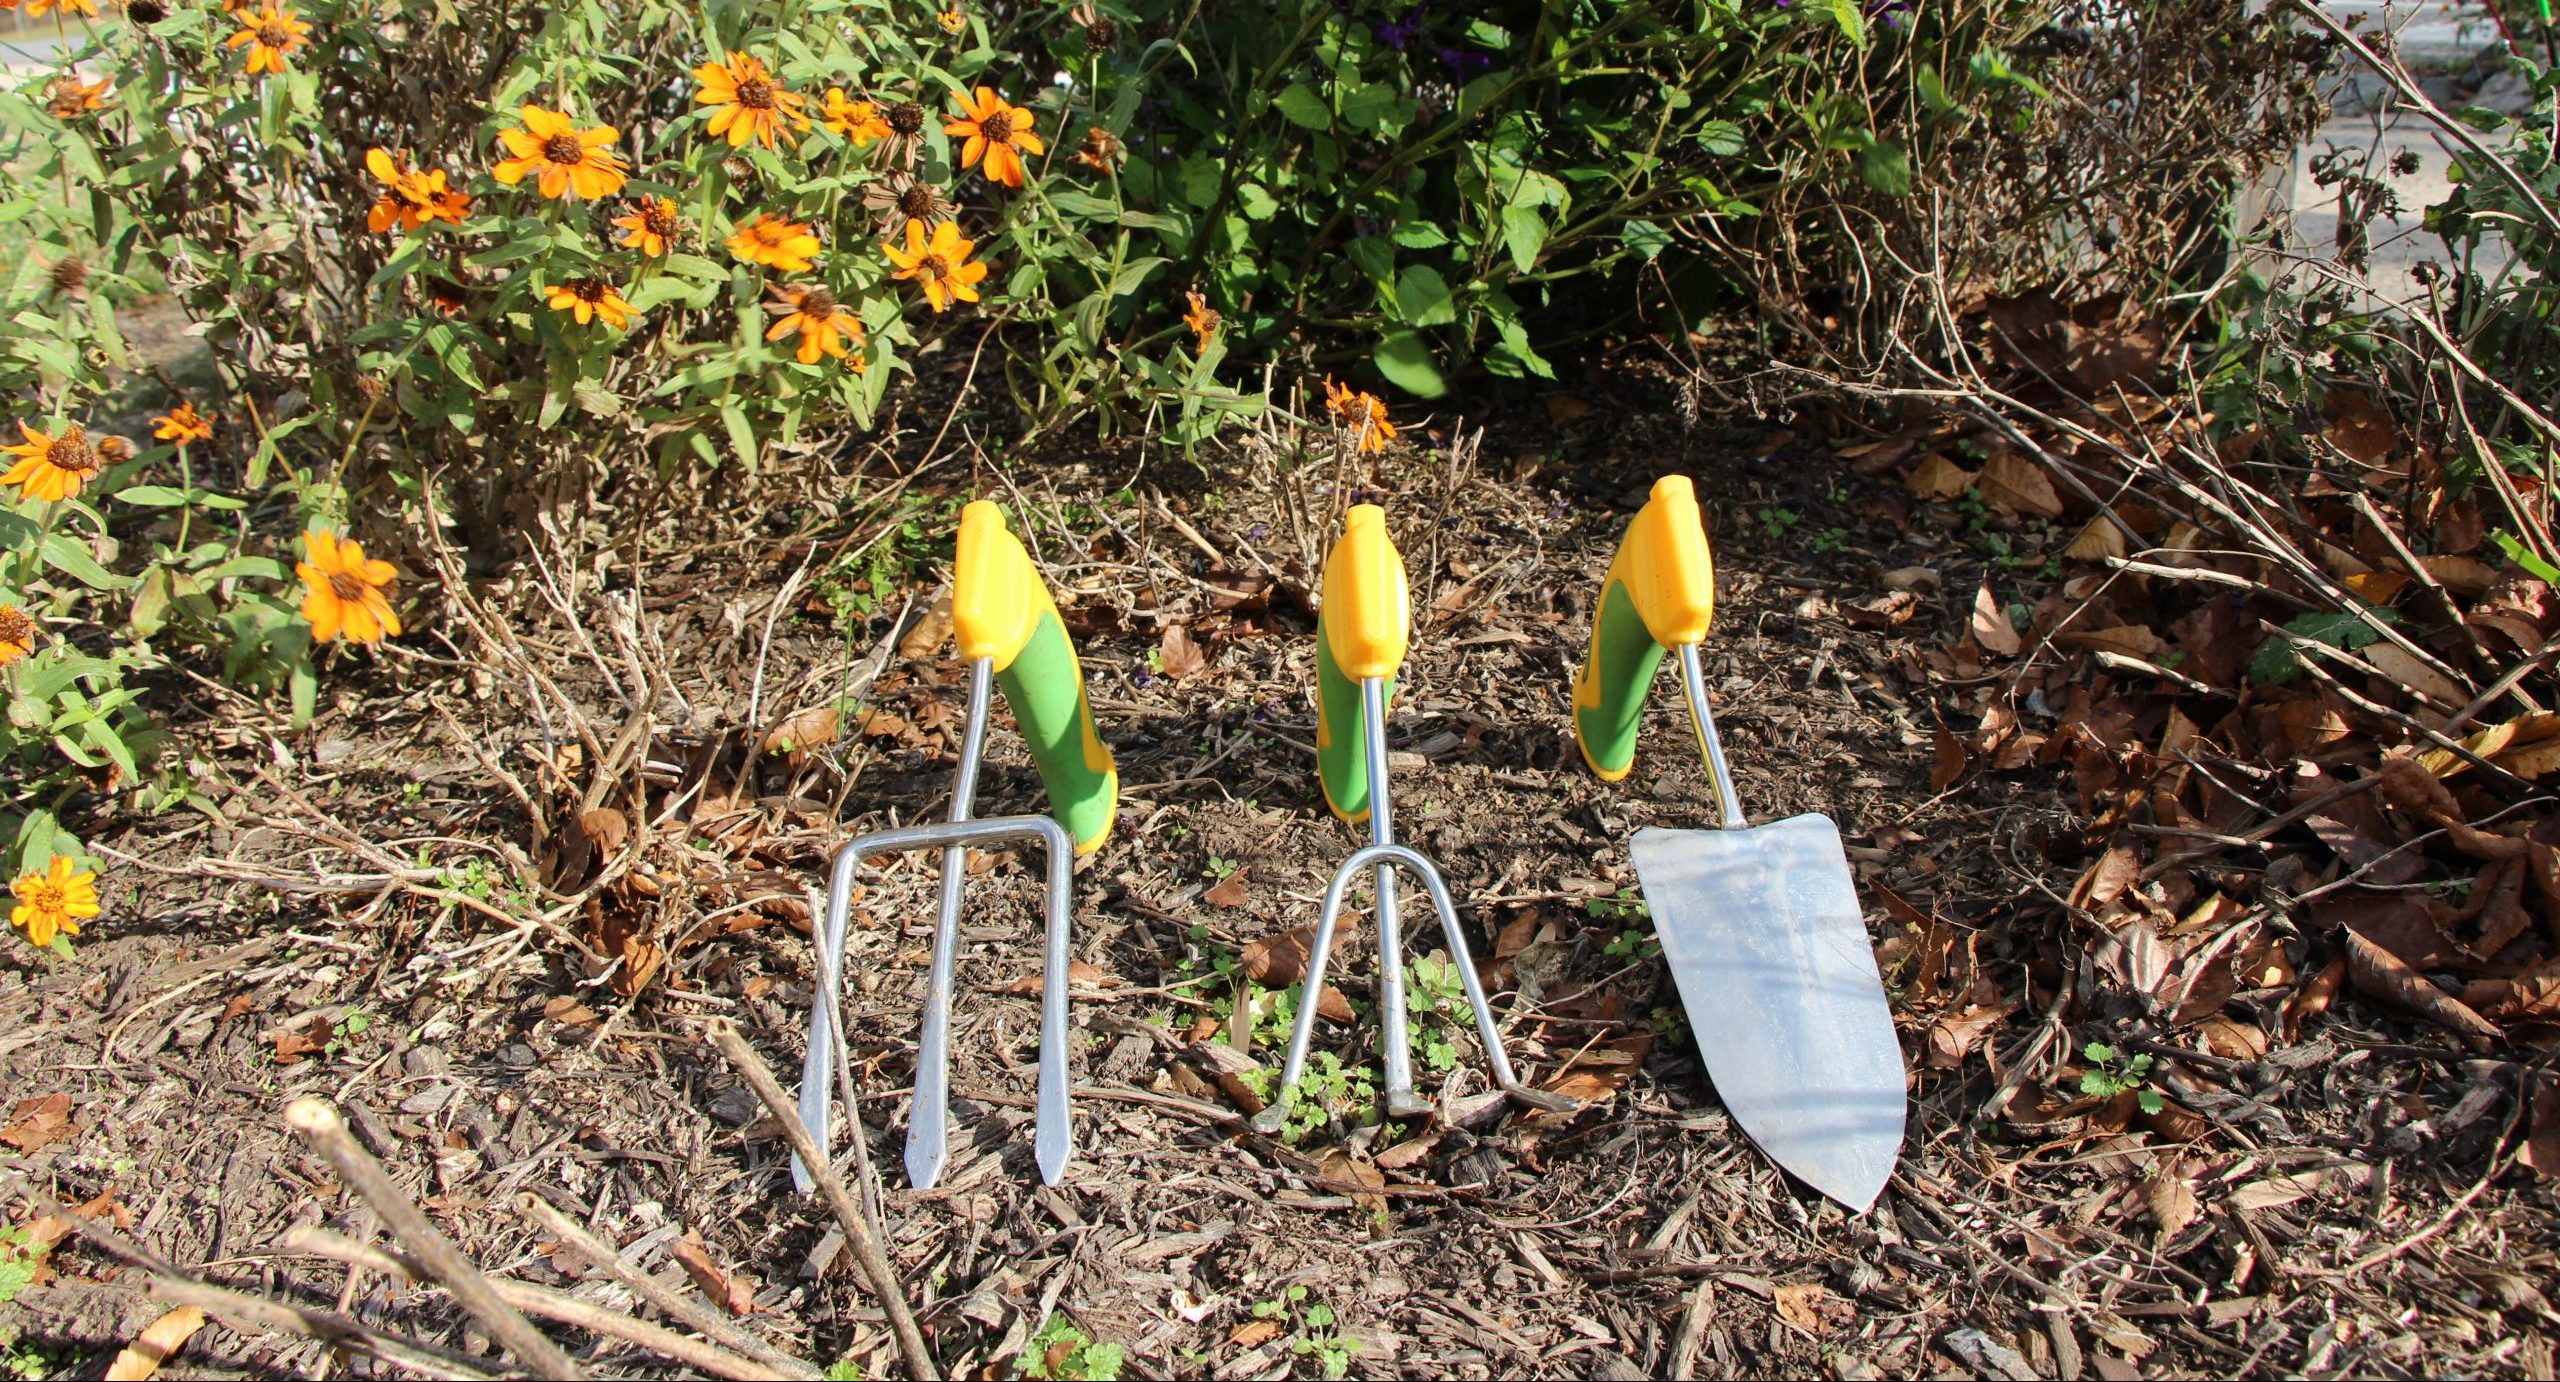 Adaptive Gardening Tools at Black Hill Nature Center